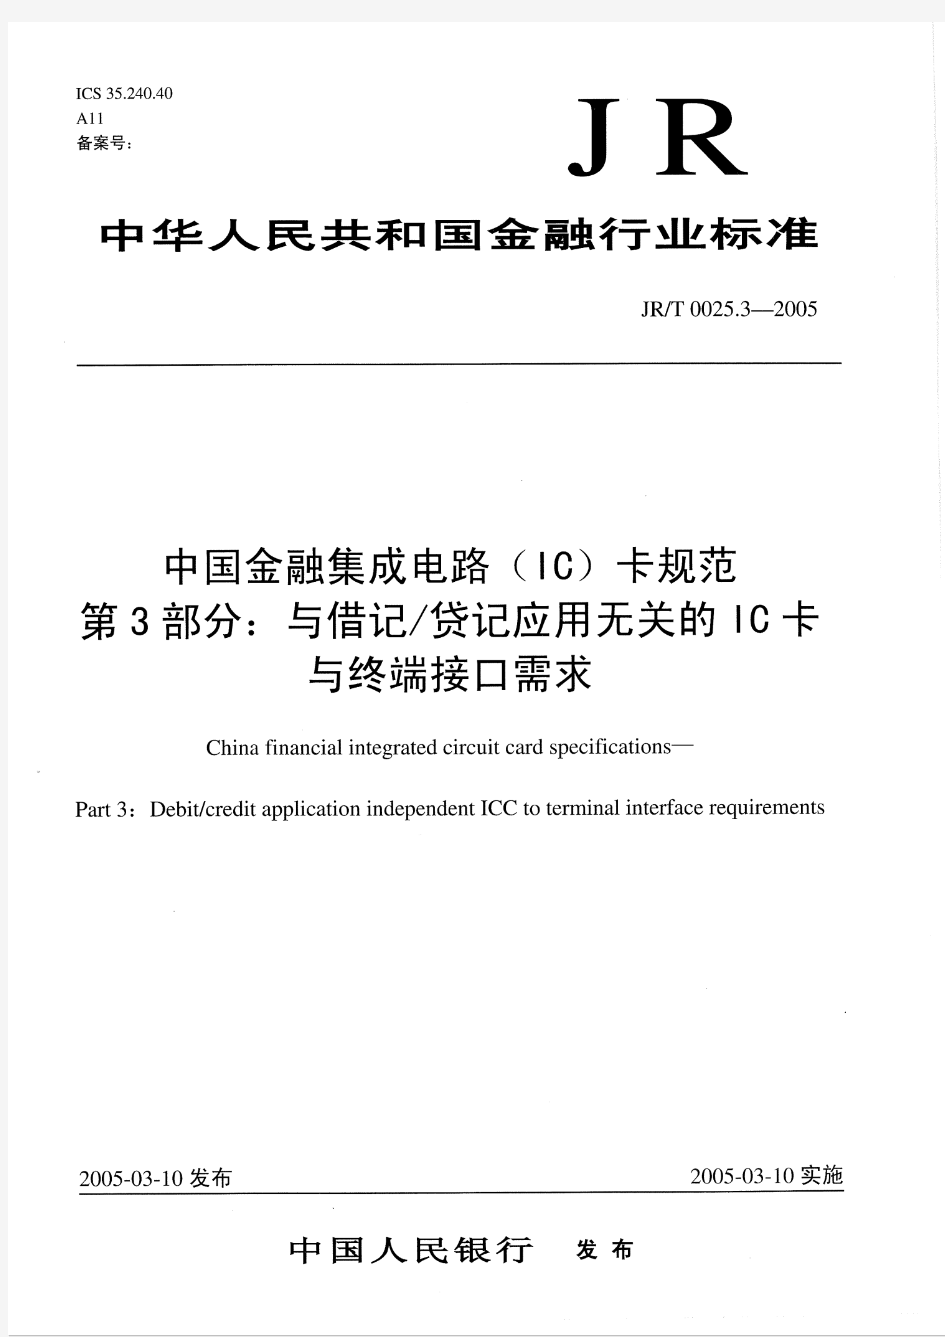 JRT 0025.3-2005 中国金融集成电路(IC)卡规范 第3部分 与借记-贷记应用无关的IC卡与终端接口需求